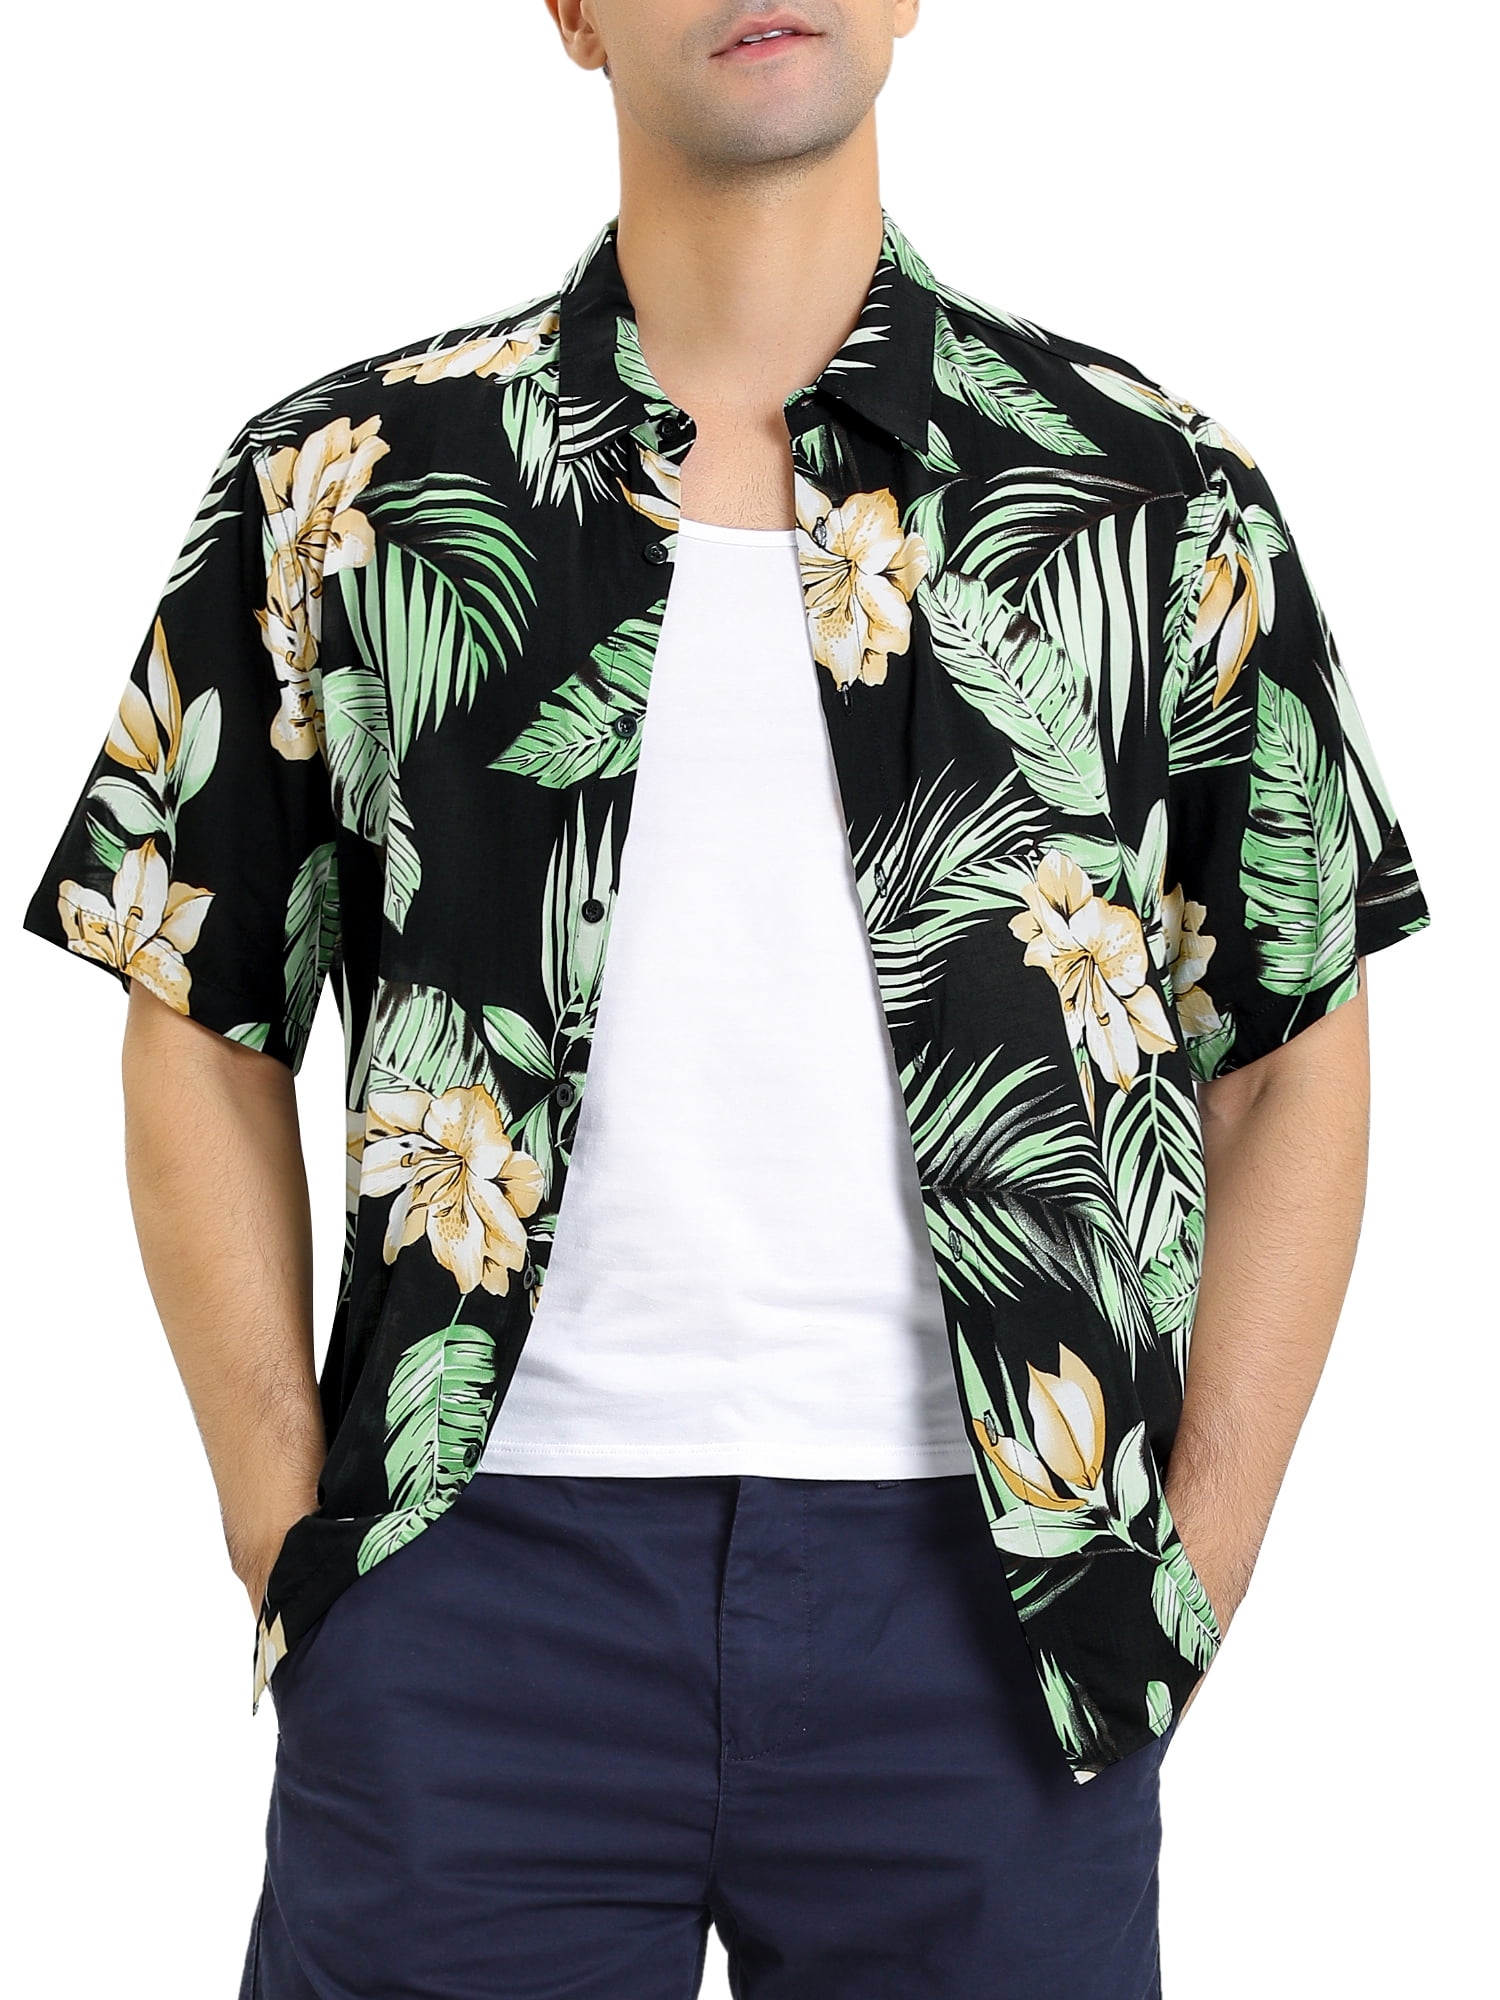 VividYouMen Plus-Size Summer Printing Beach Button Short Sleeve Top Tshirt 